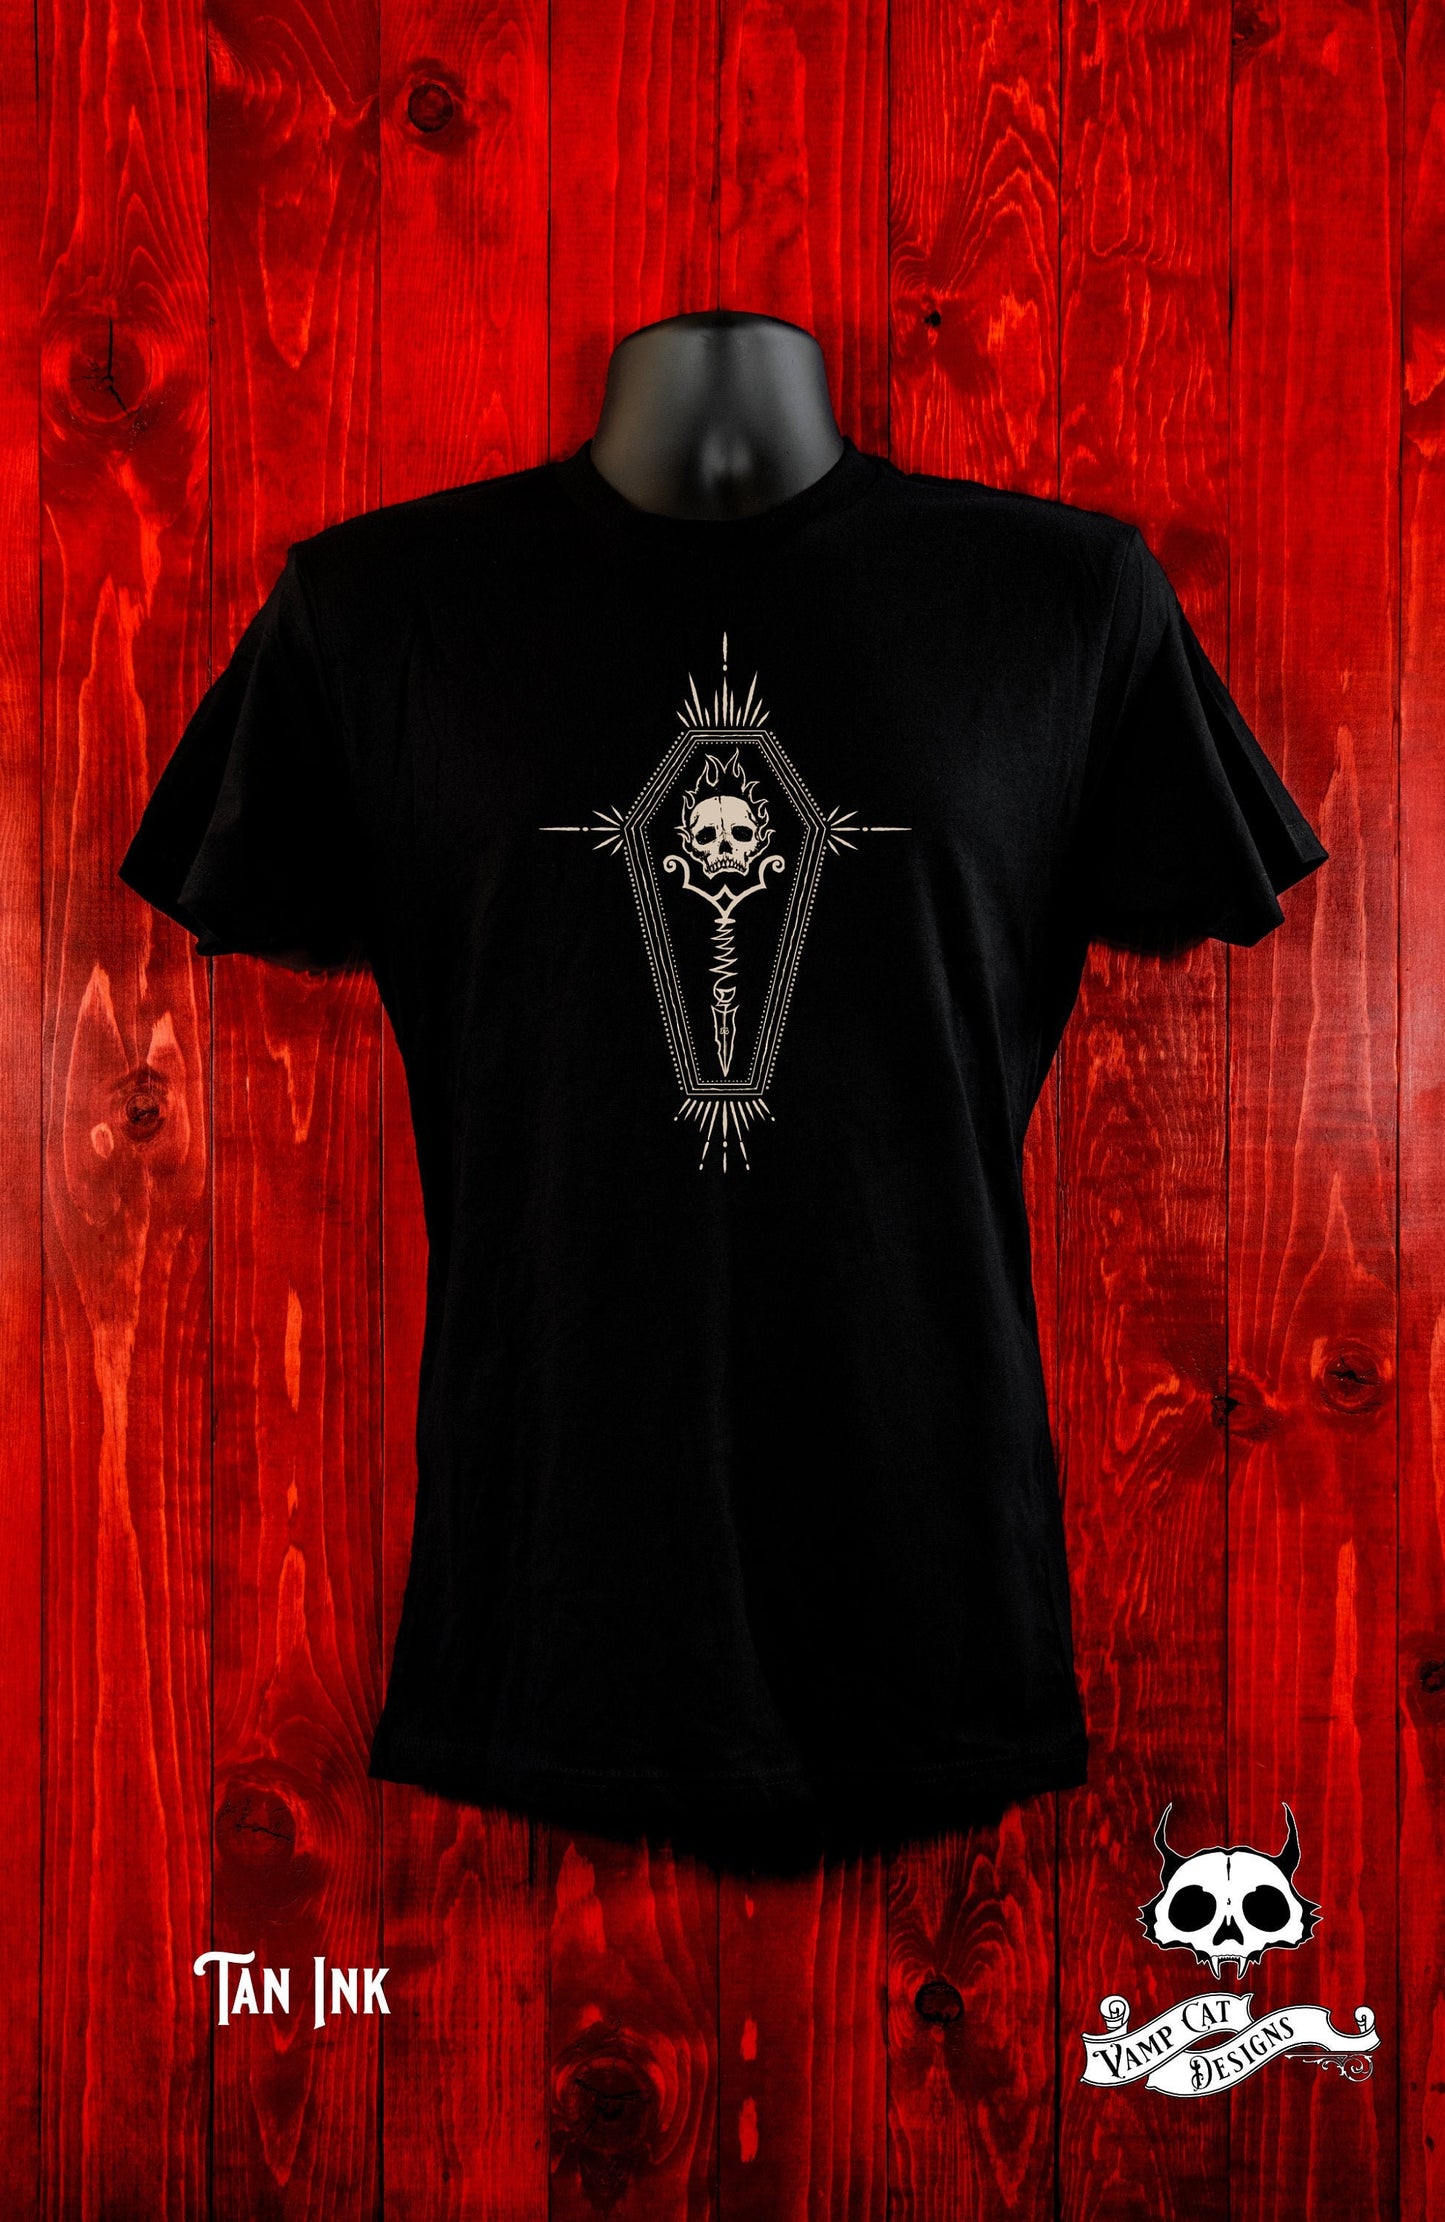 Eternal Flame-Unisex Tee-Skull Coffin-Dark Apparel-Occult Art-Men and Women's Tee-Gothic Tee-Macabre Art-Skull Shirt-Cryptic Art Shirt